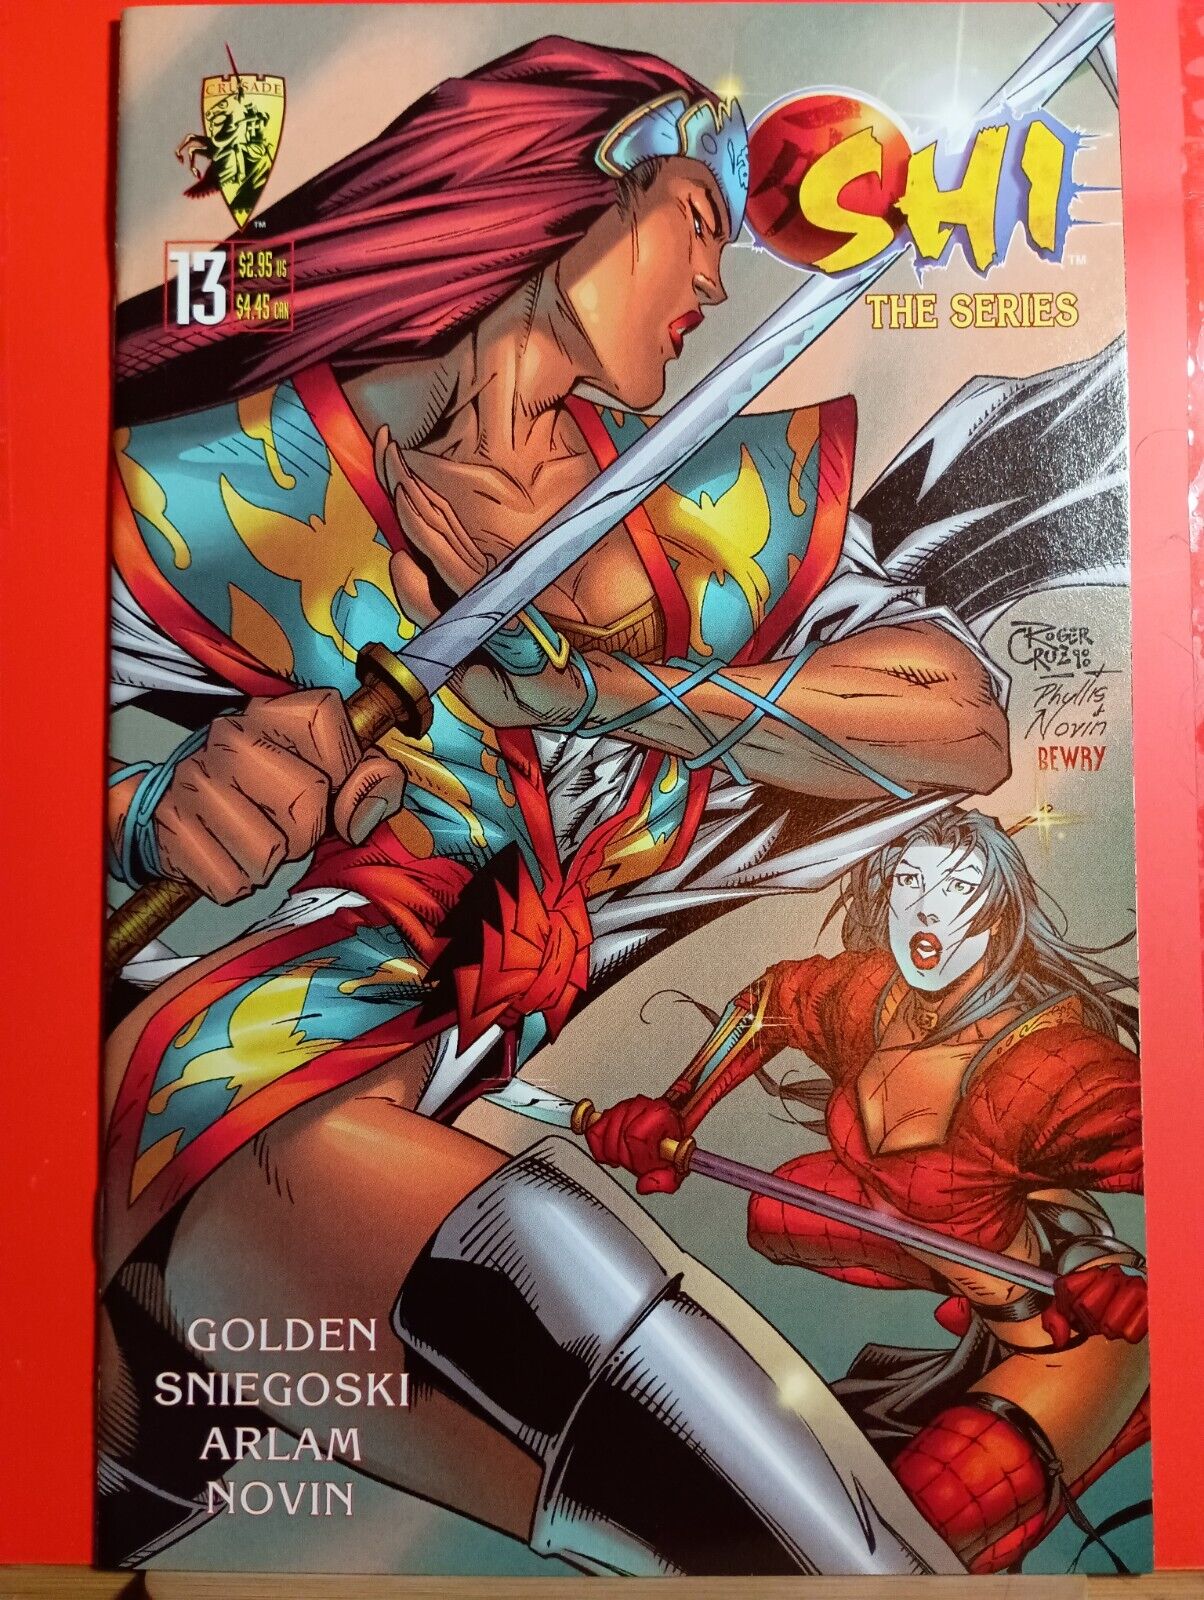 1998 Crusade Comics Shi The Series Issue 13 Roger Cruz Cover Artist PNG